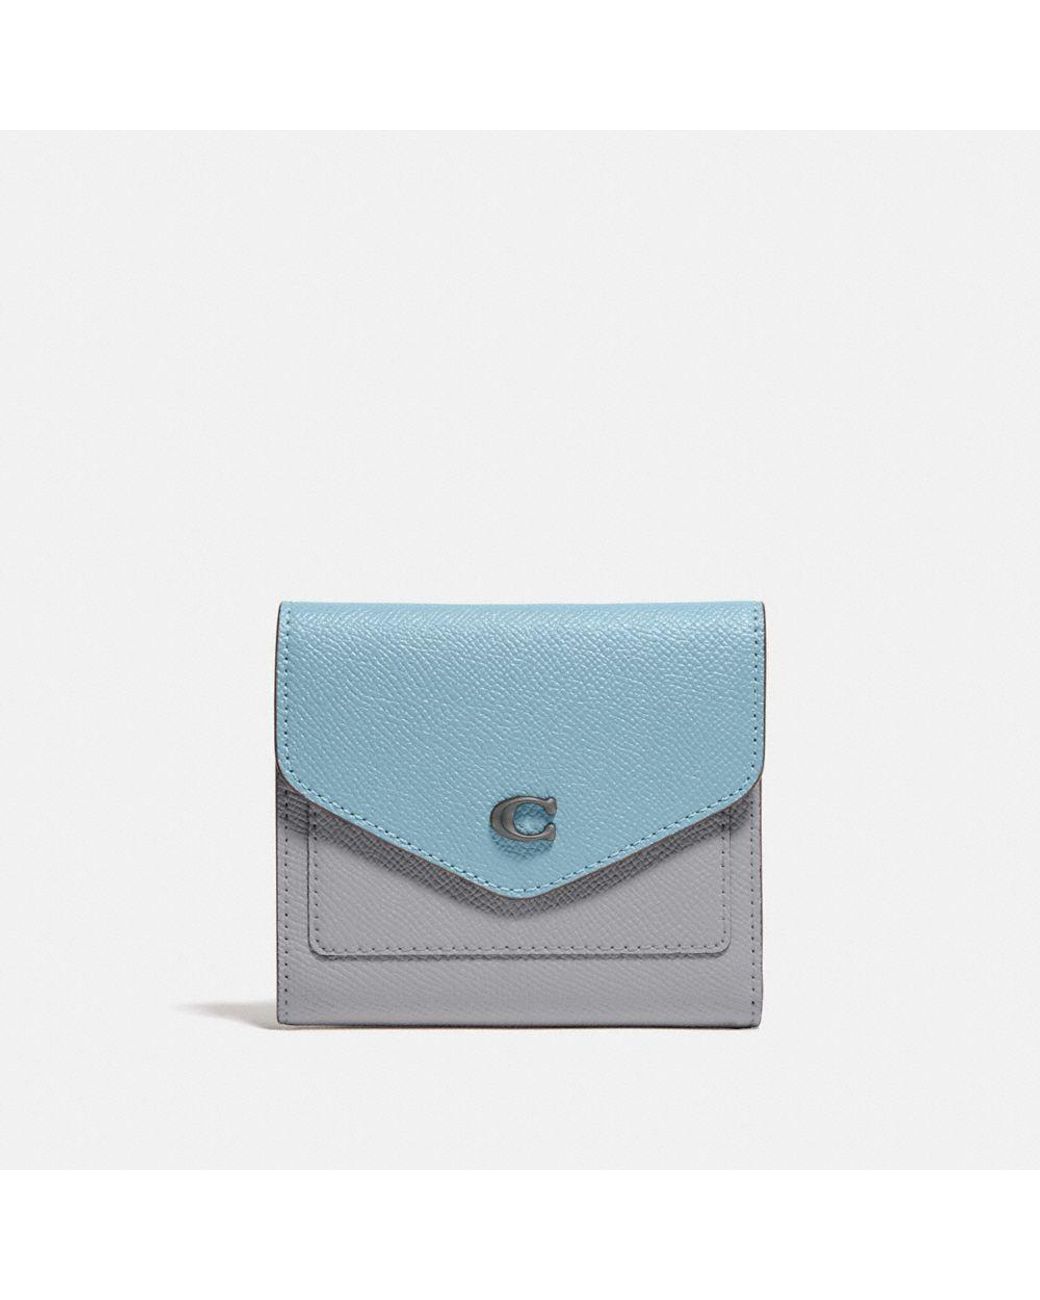 COACH Leather Wyn Small Wallet In Colorblock in Blue - Lyst